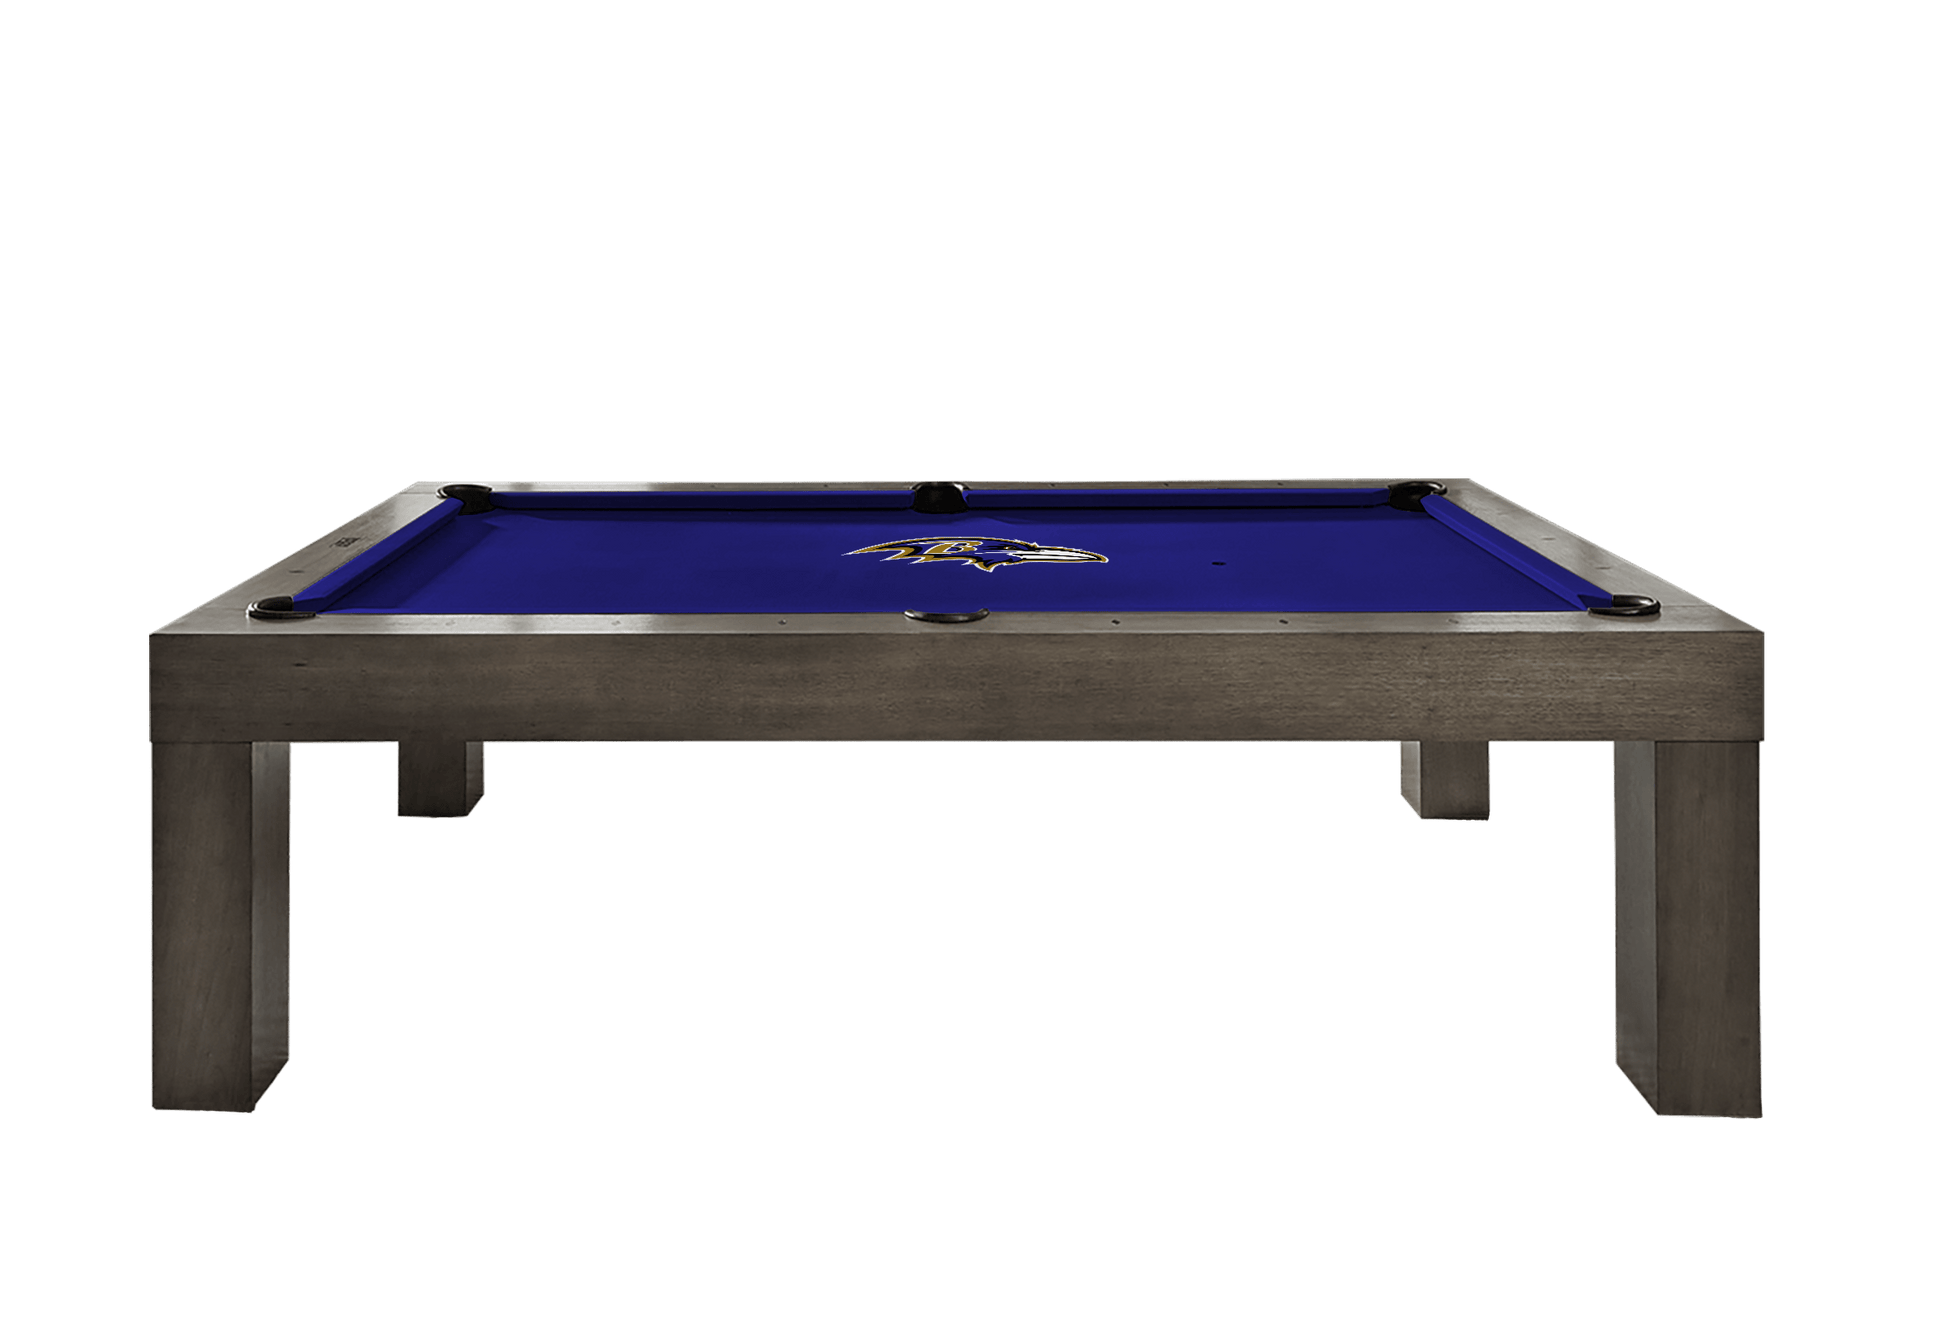 Baltimore Ravens Premium Pool Table Bundle - Charcoal Pool Bundle Home Arcade Games   